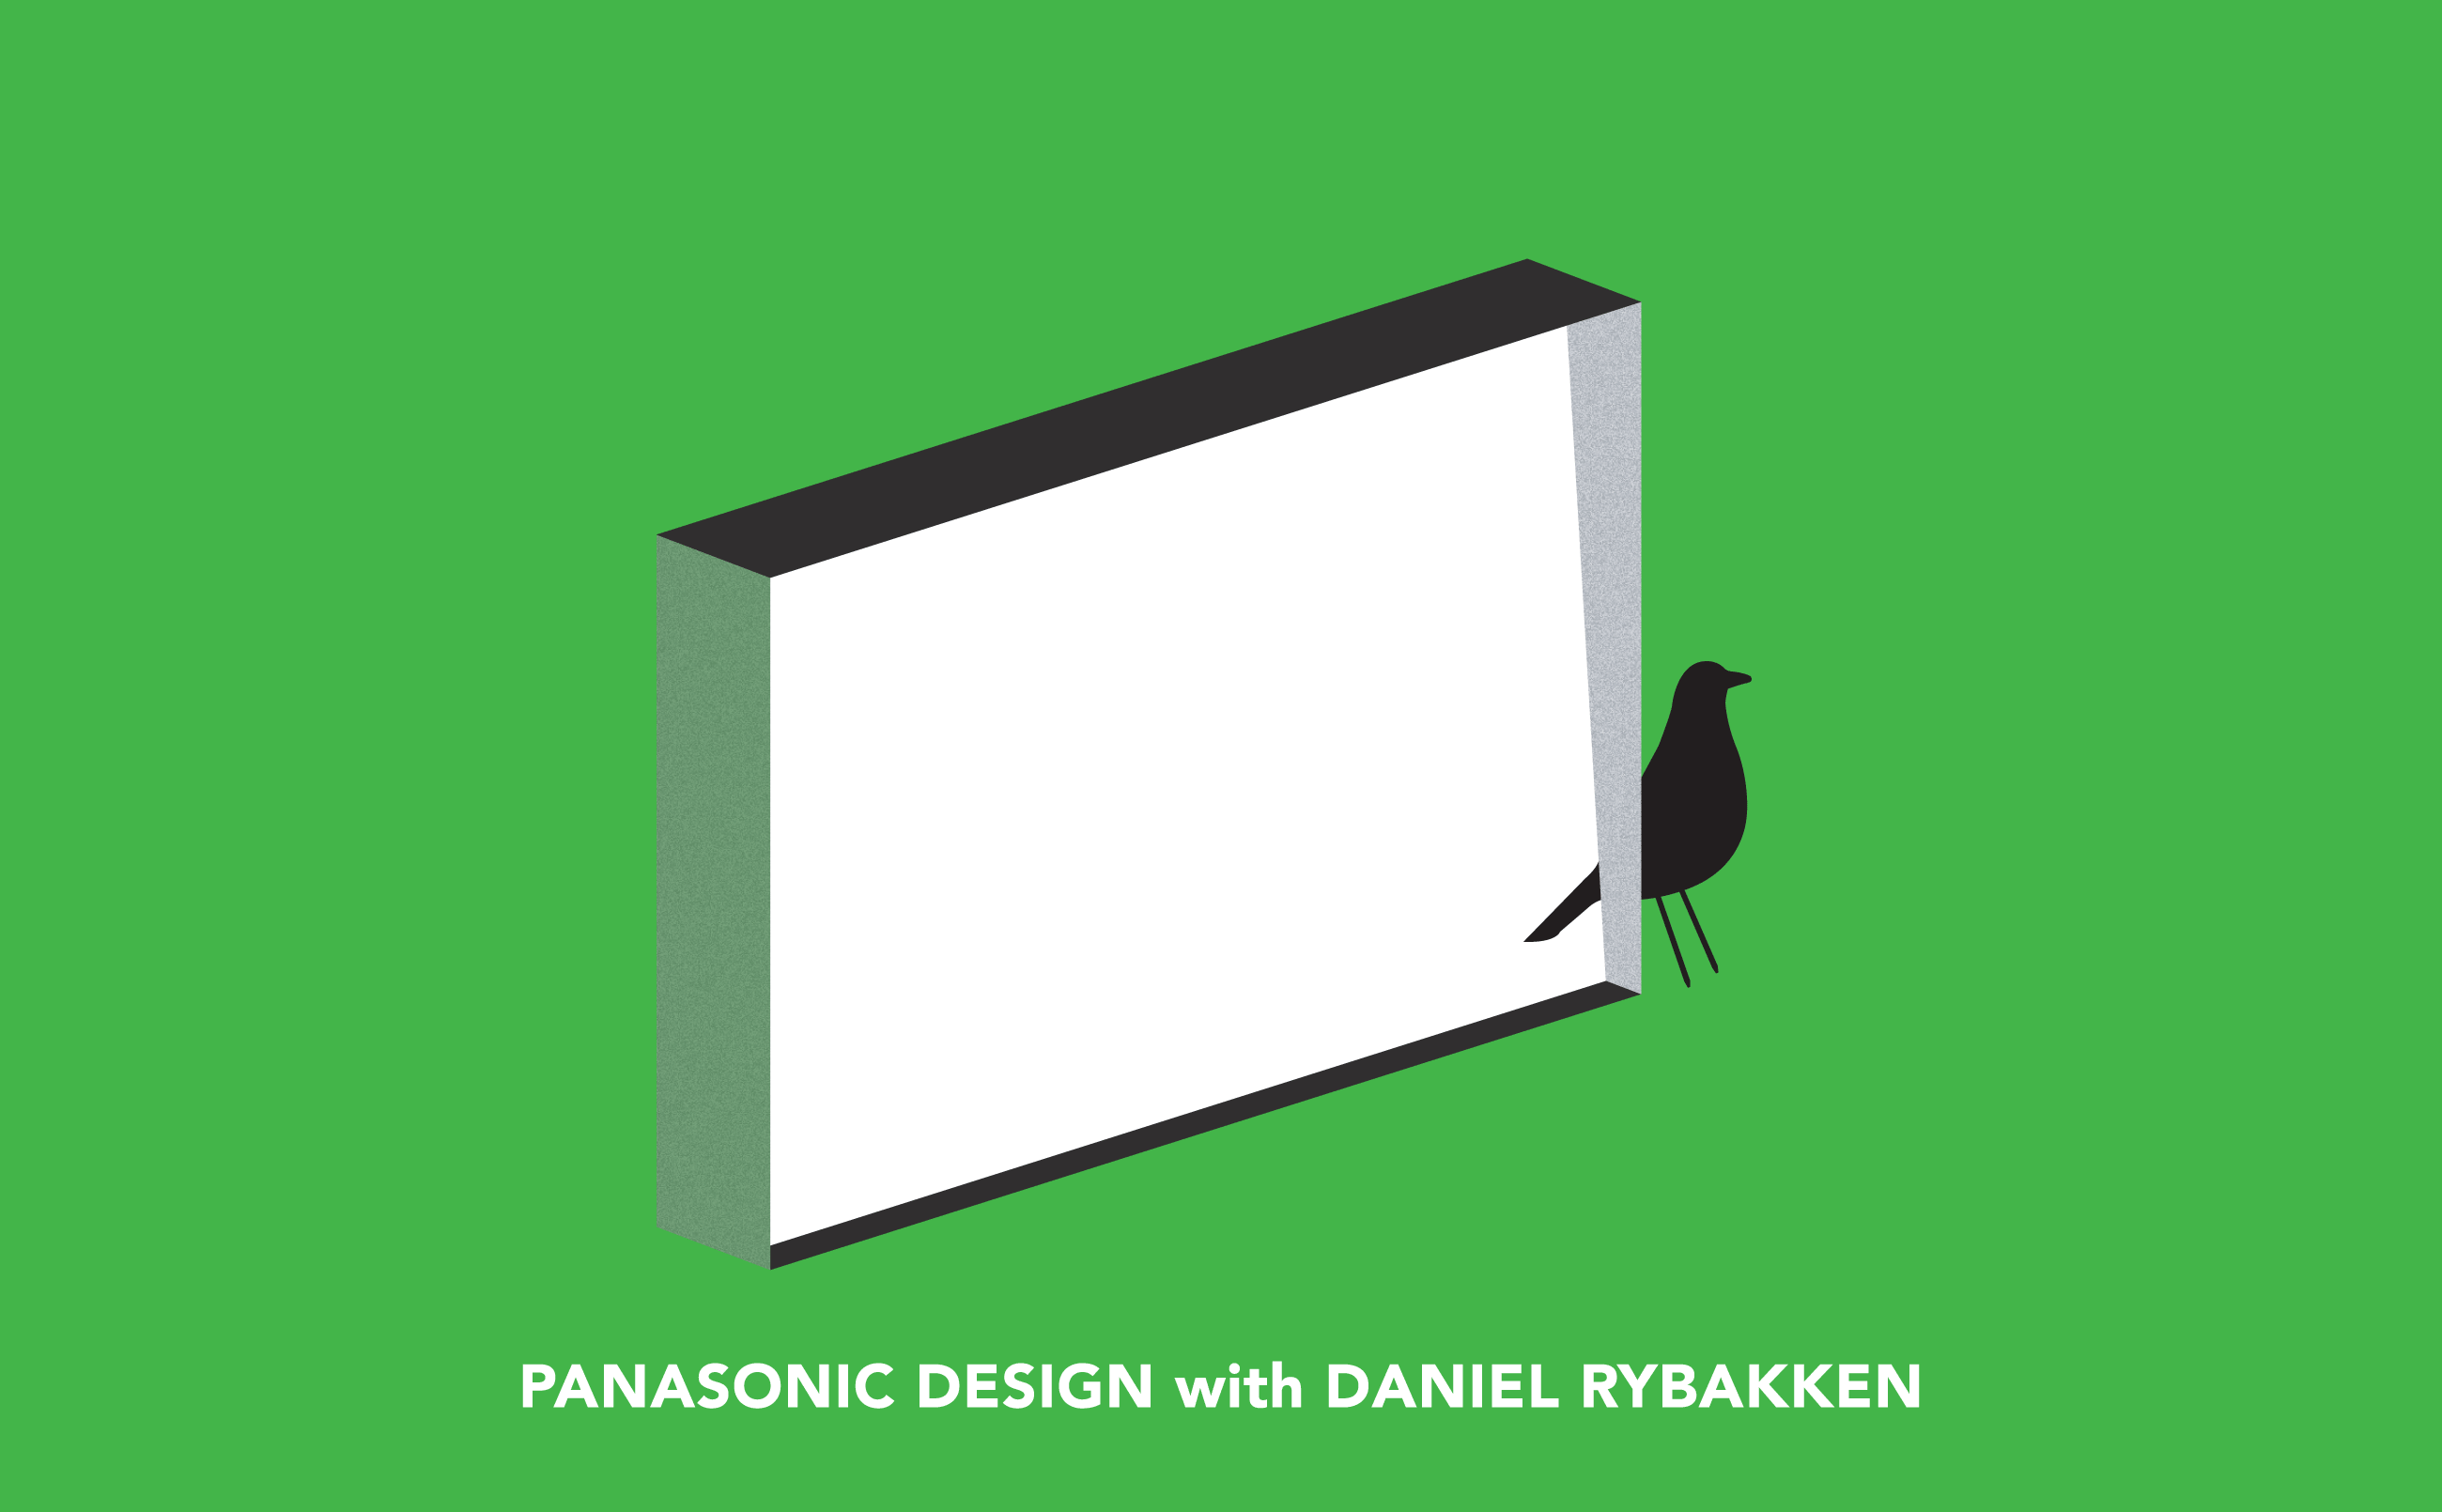 image: Panasonic design with Daniel Rybakken